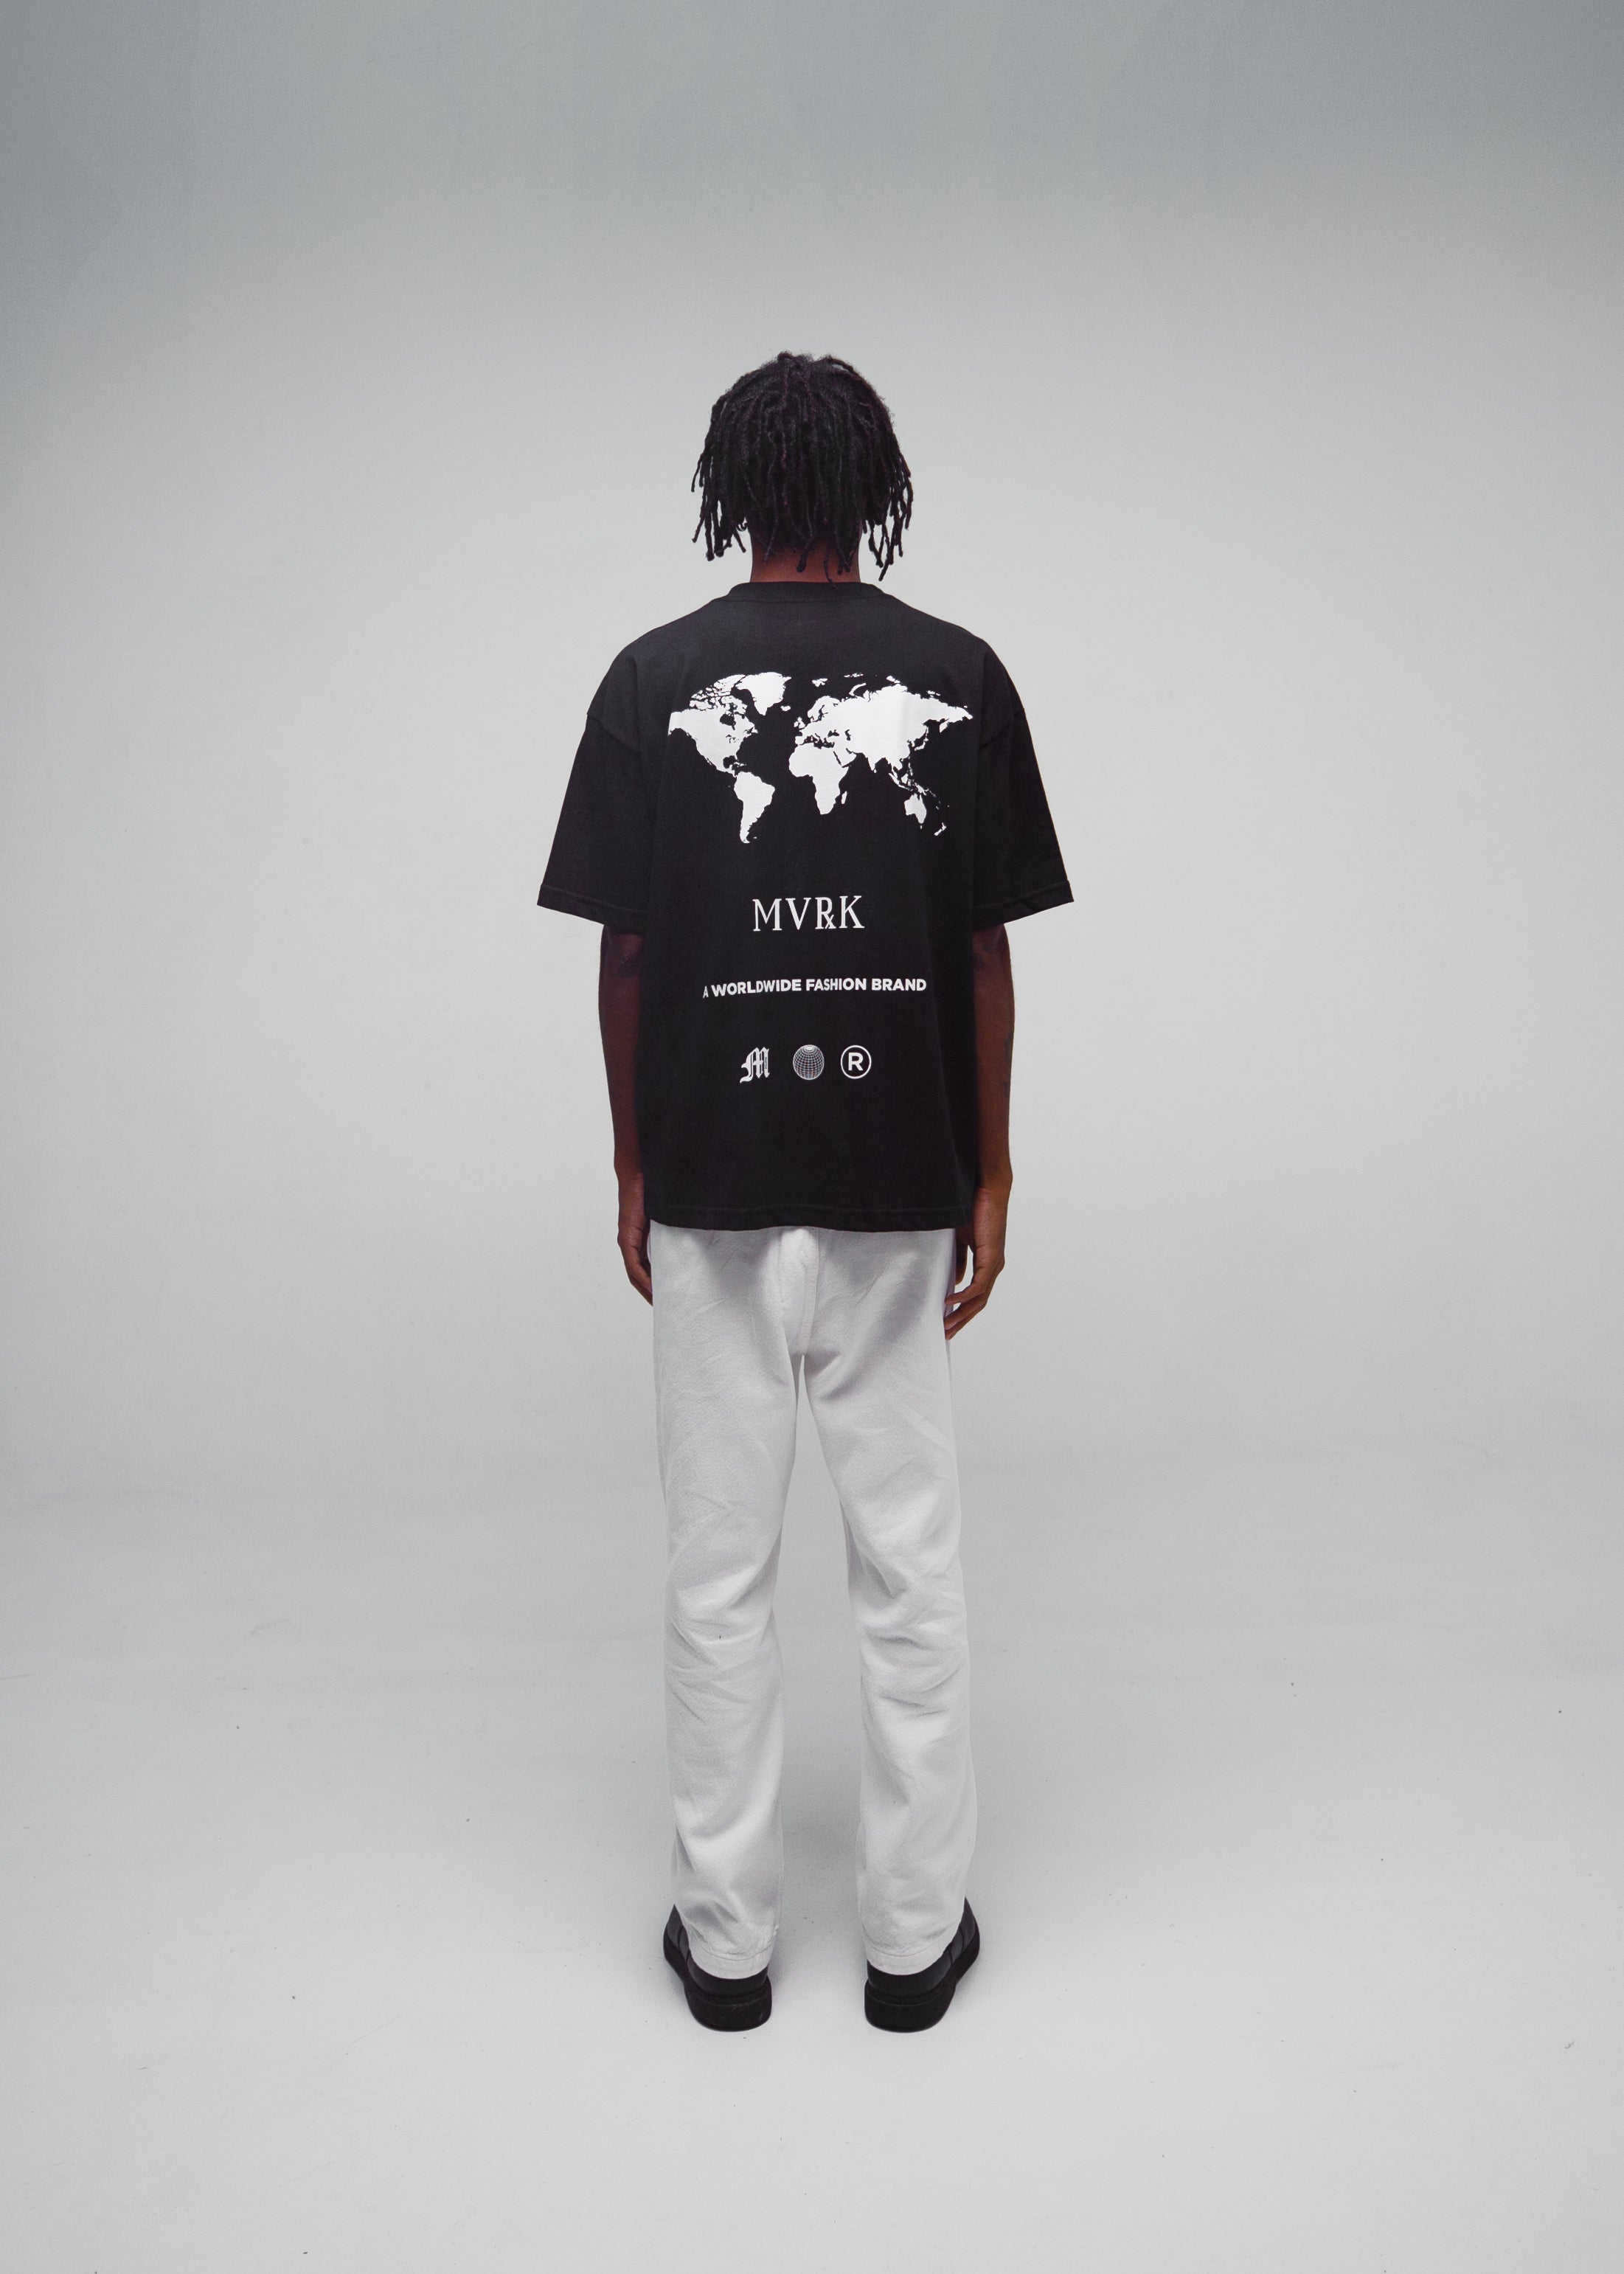 MVRK - Camiseta Preta Worldwide